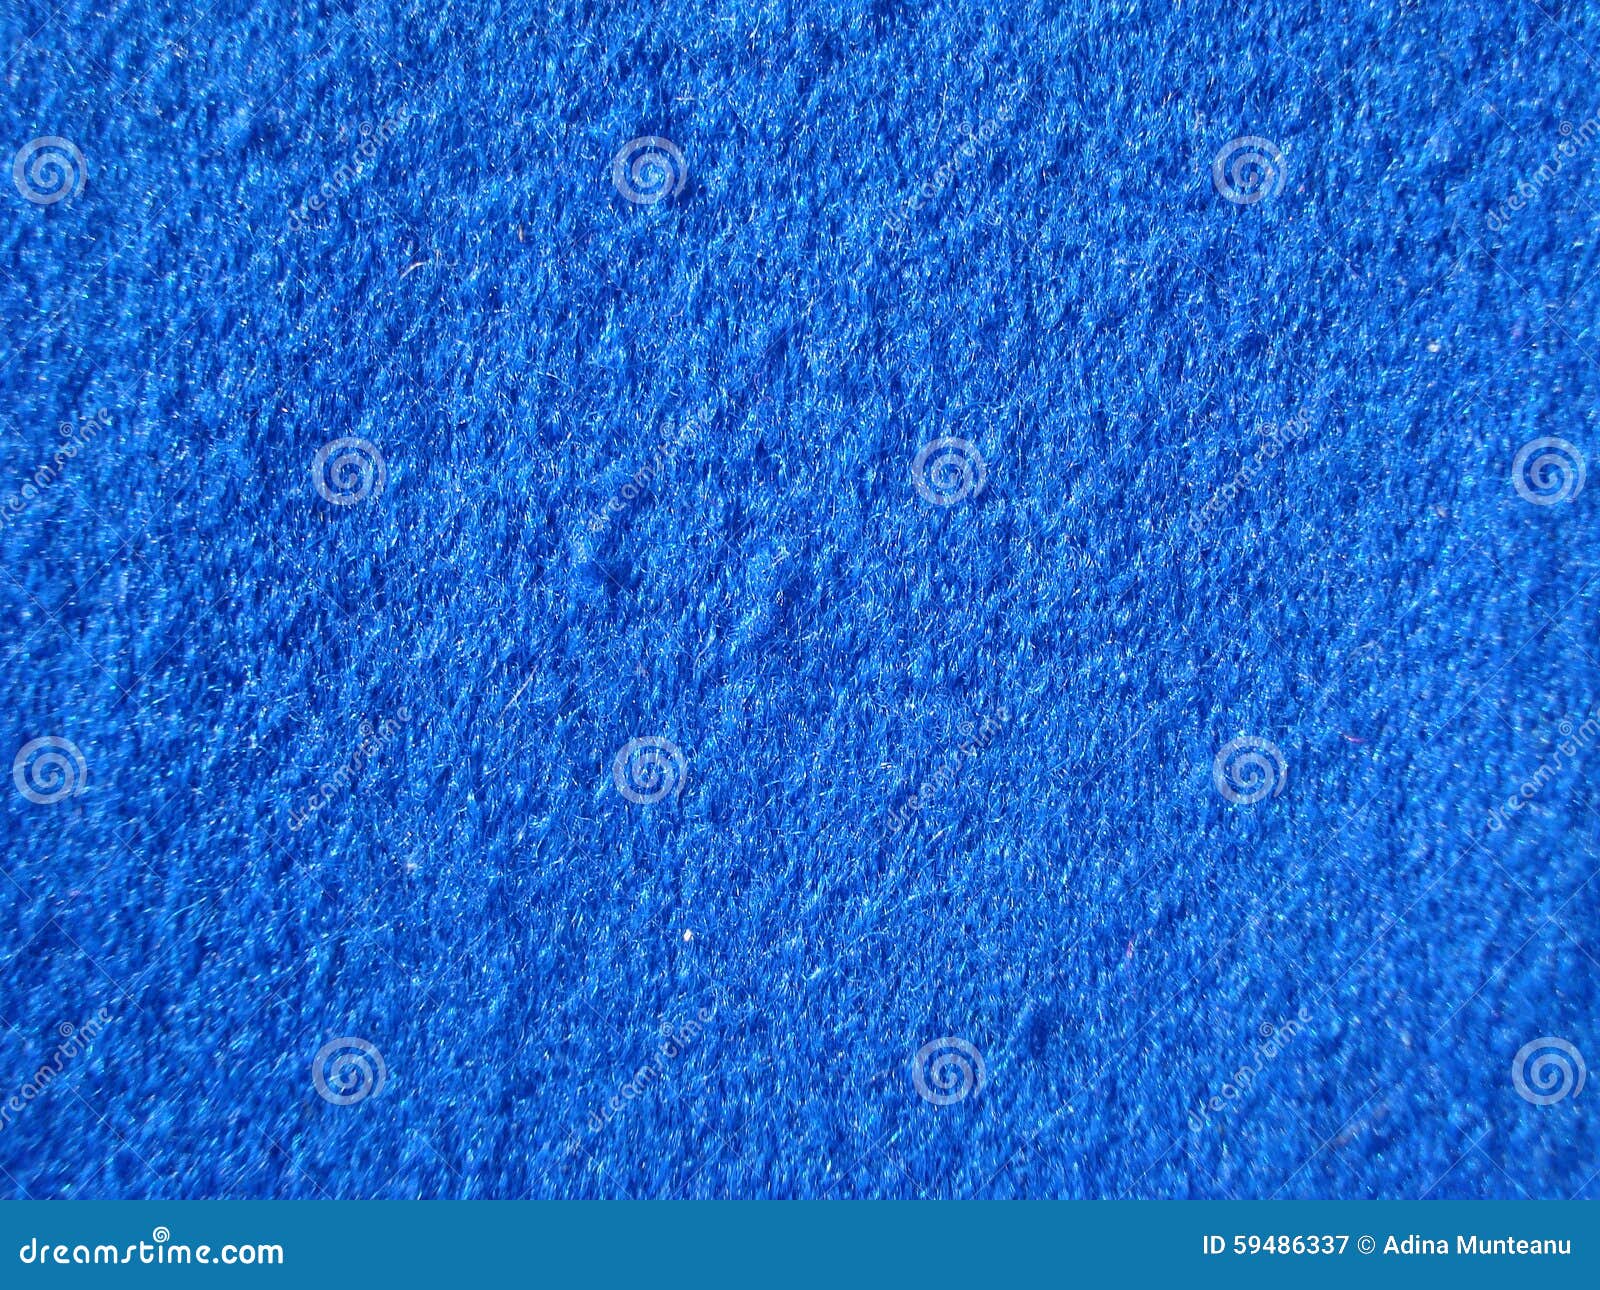 Blue wool rustic fabric stock image. Image of looms, rustic - 59486337